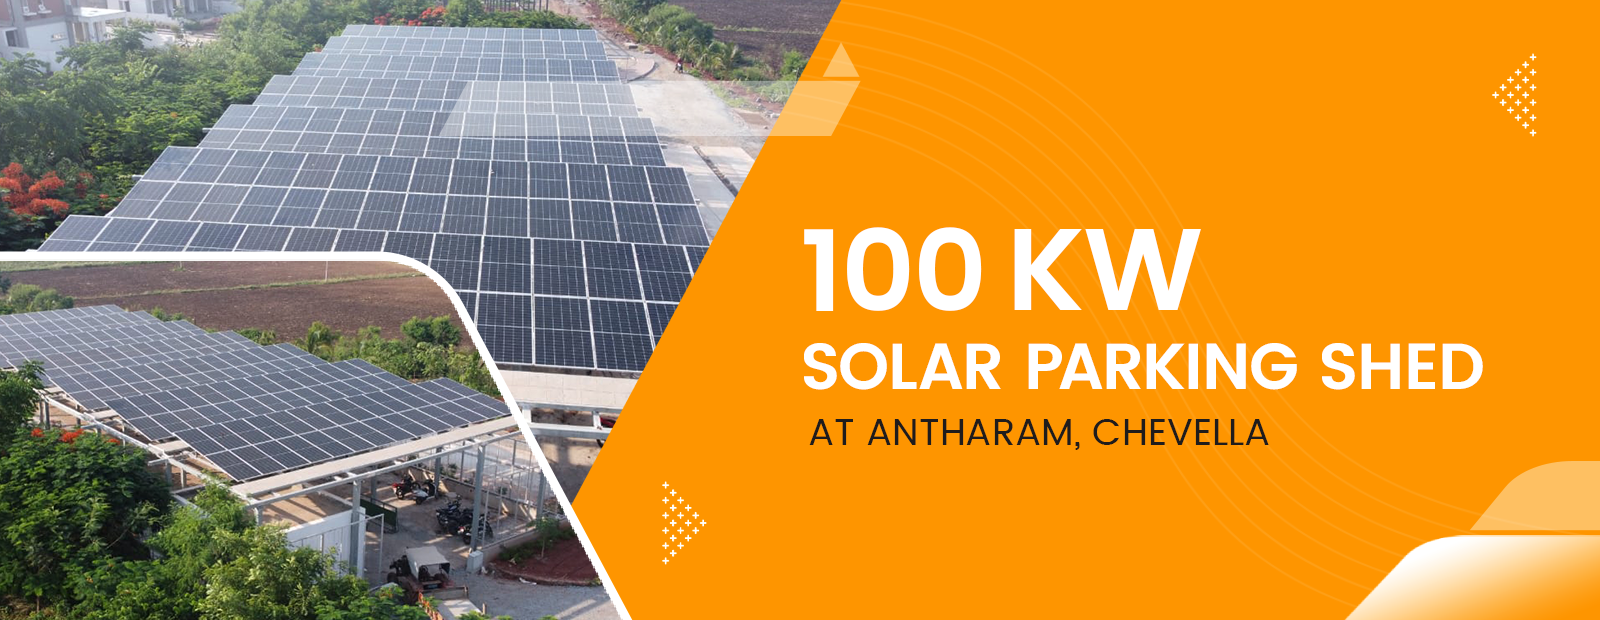 Solar Parking Shed at Antharam-Chevella